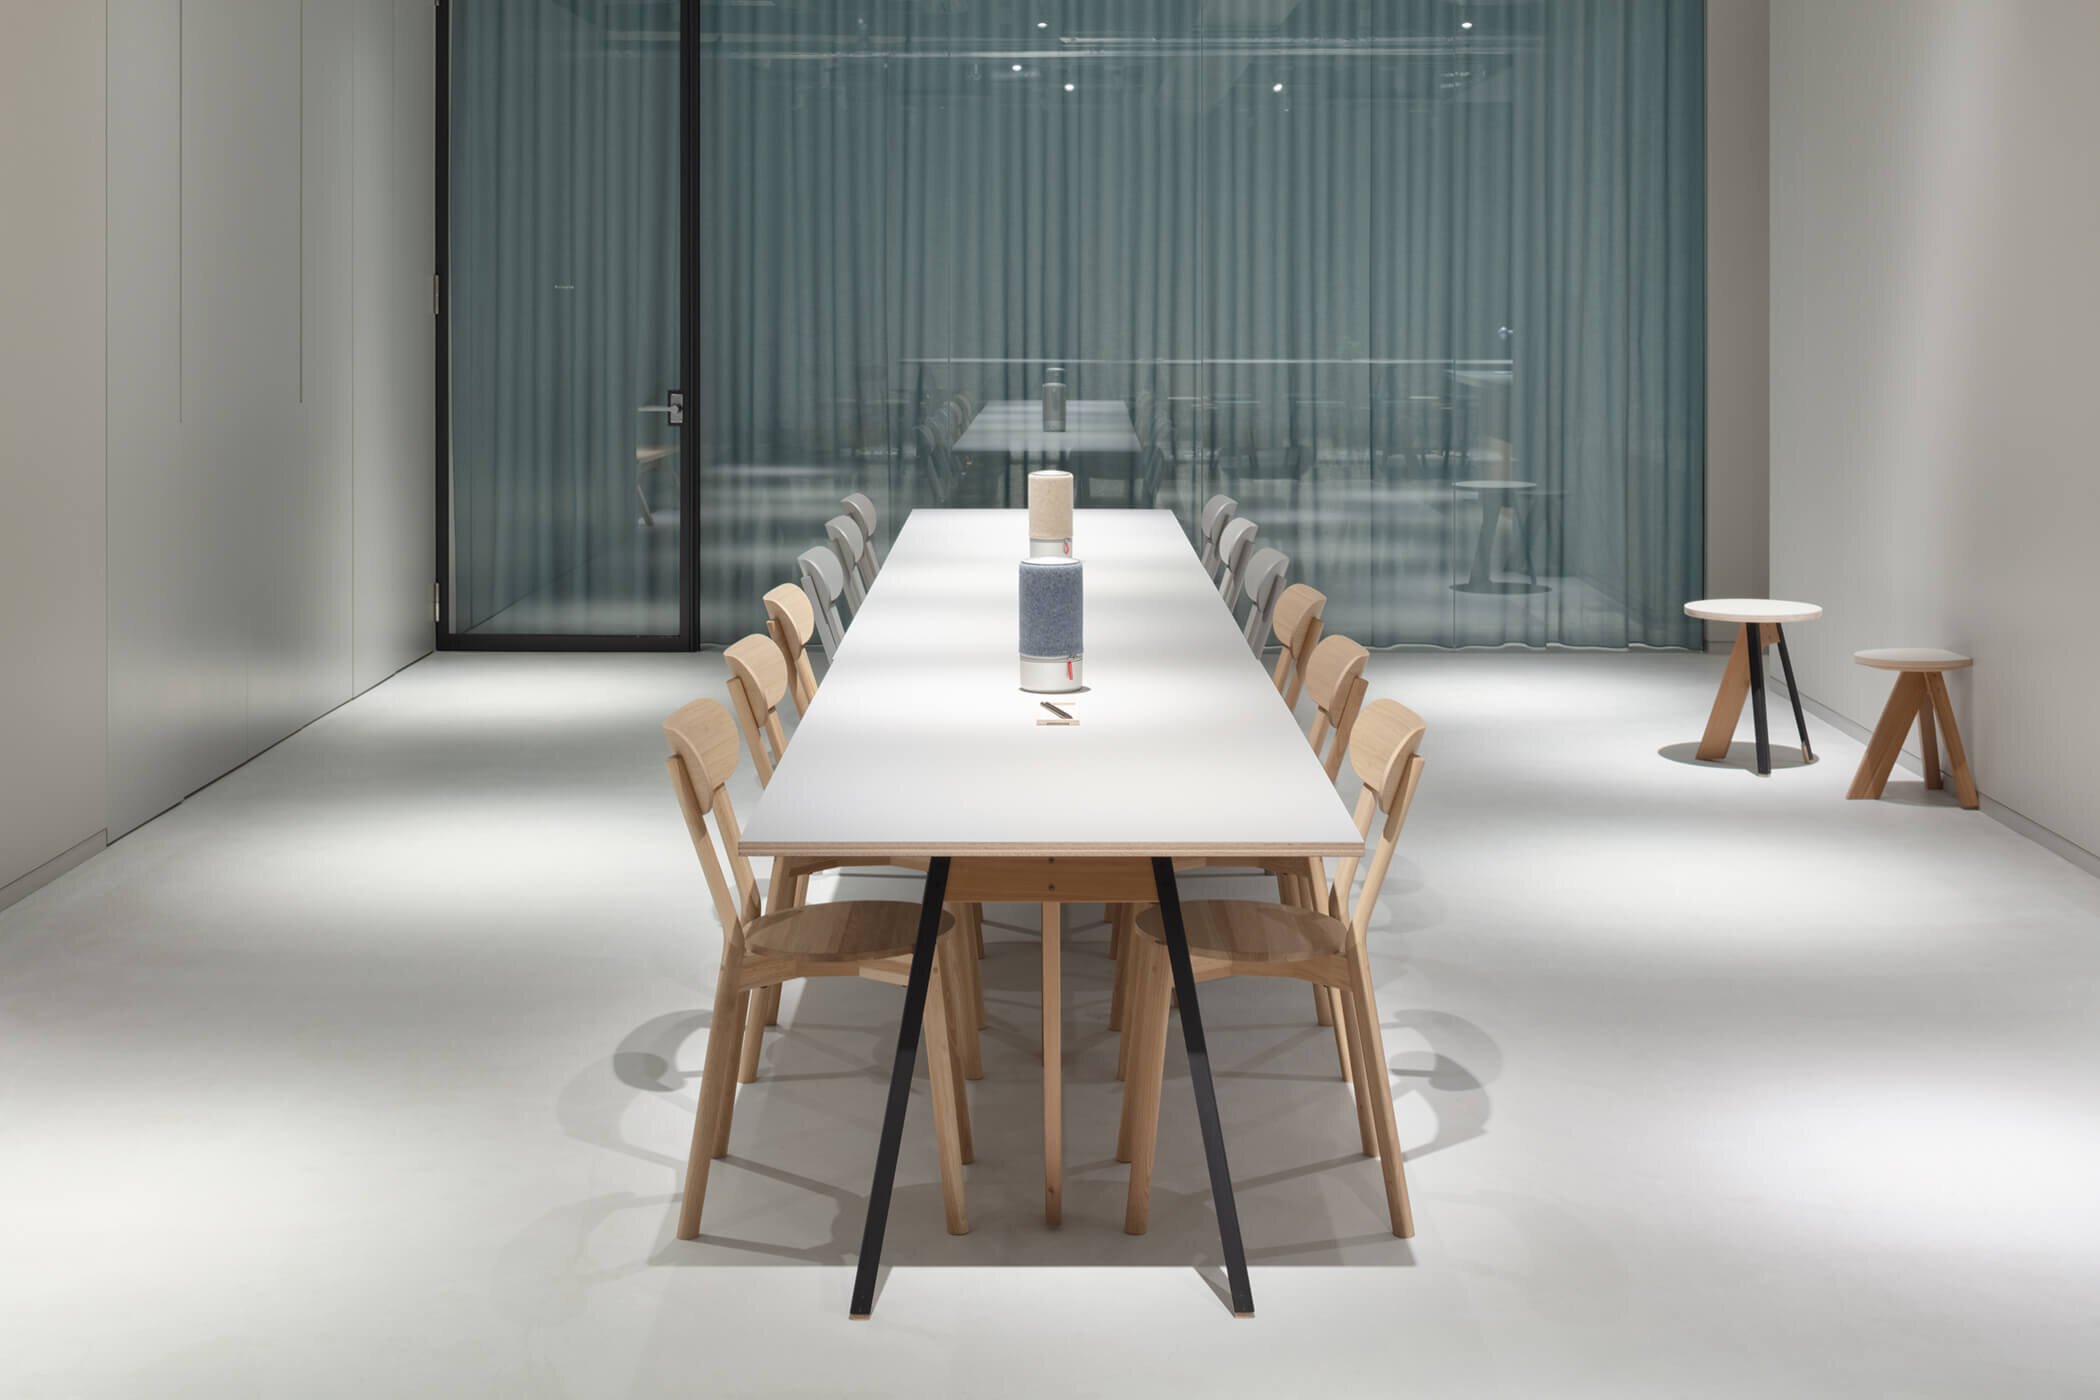 keiji-ashizawa-design-dotcom-space-tokyo-japan-cafe-interior-design-idreit-139.jpg